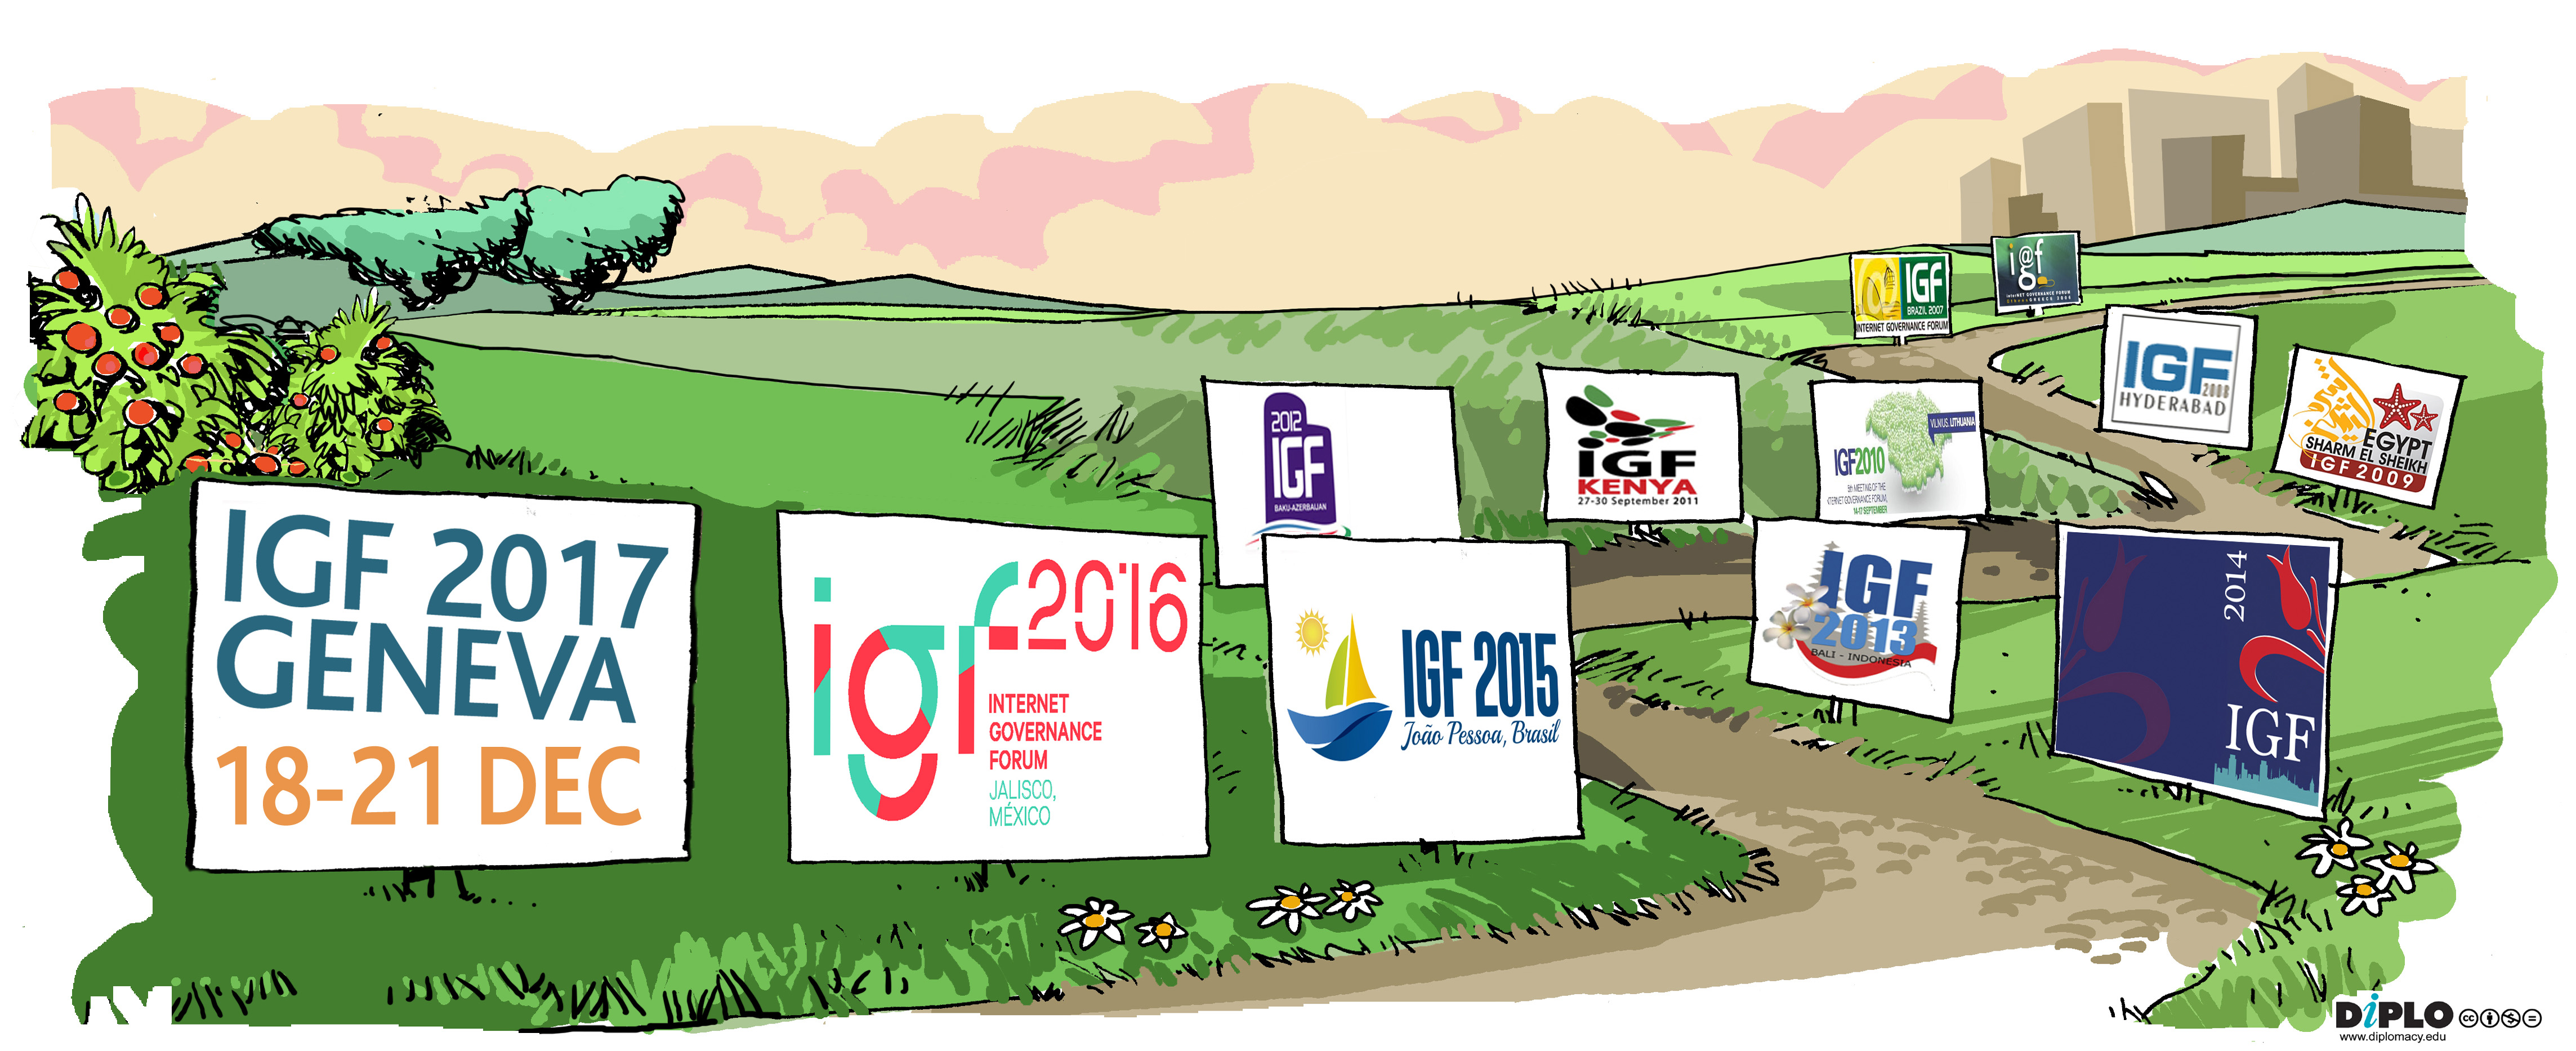 IGF2017: On the road to Geneva